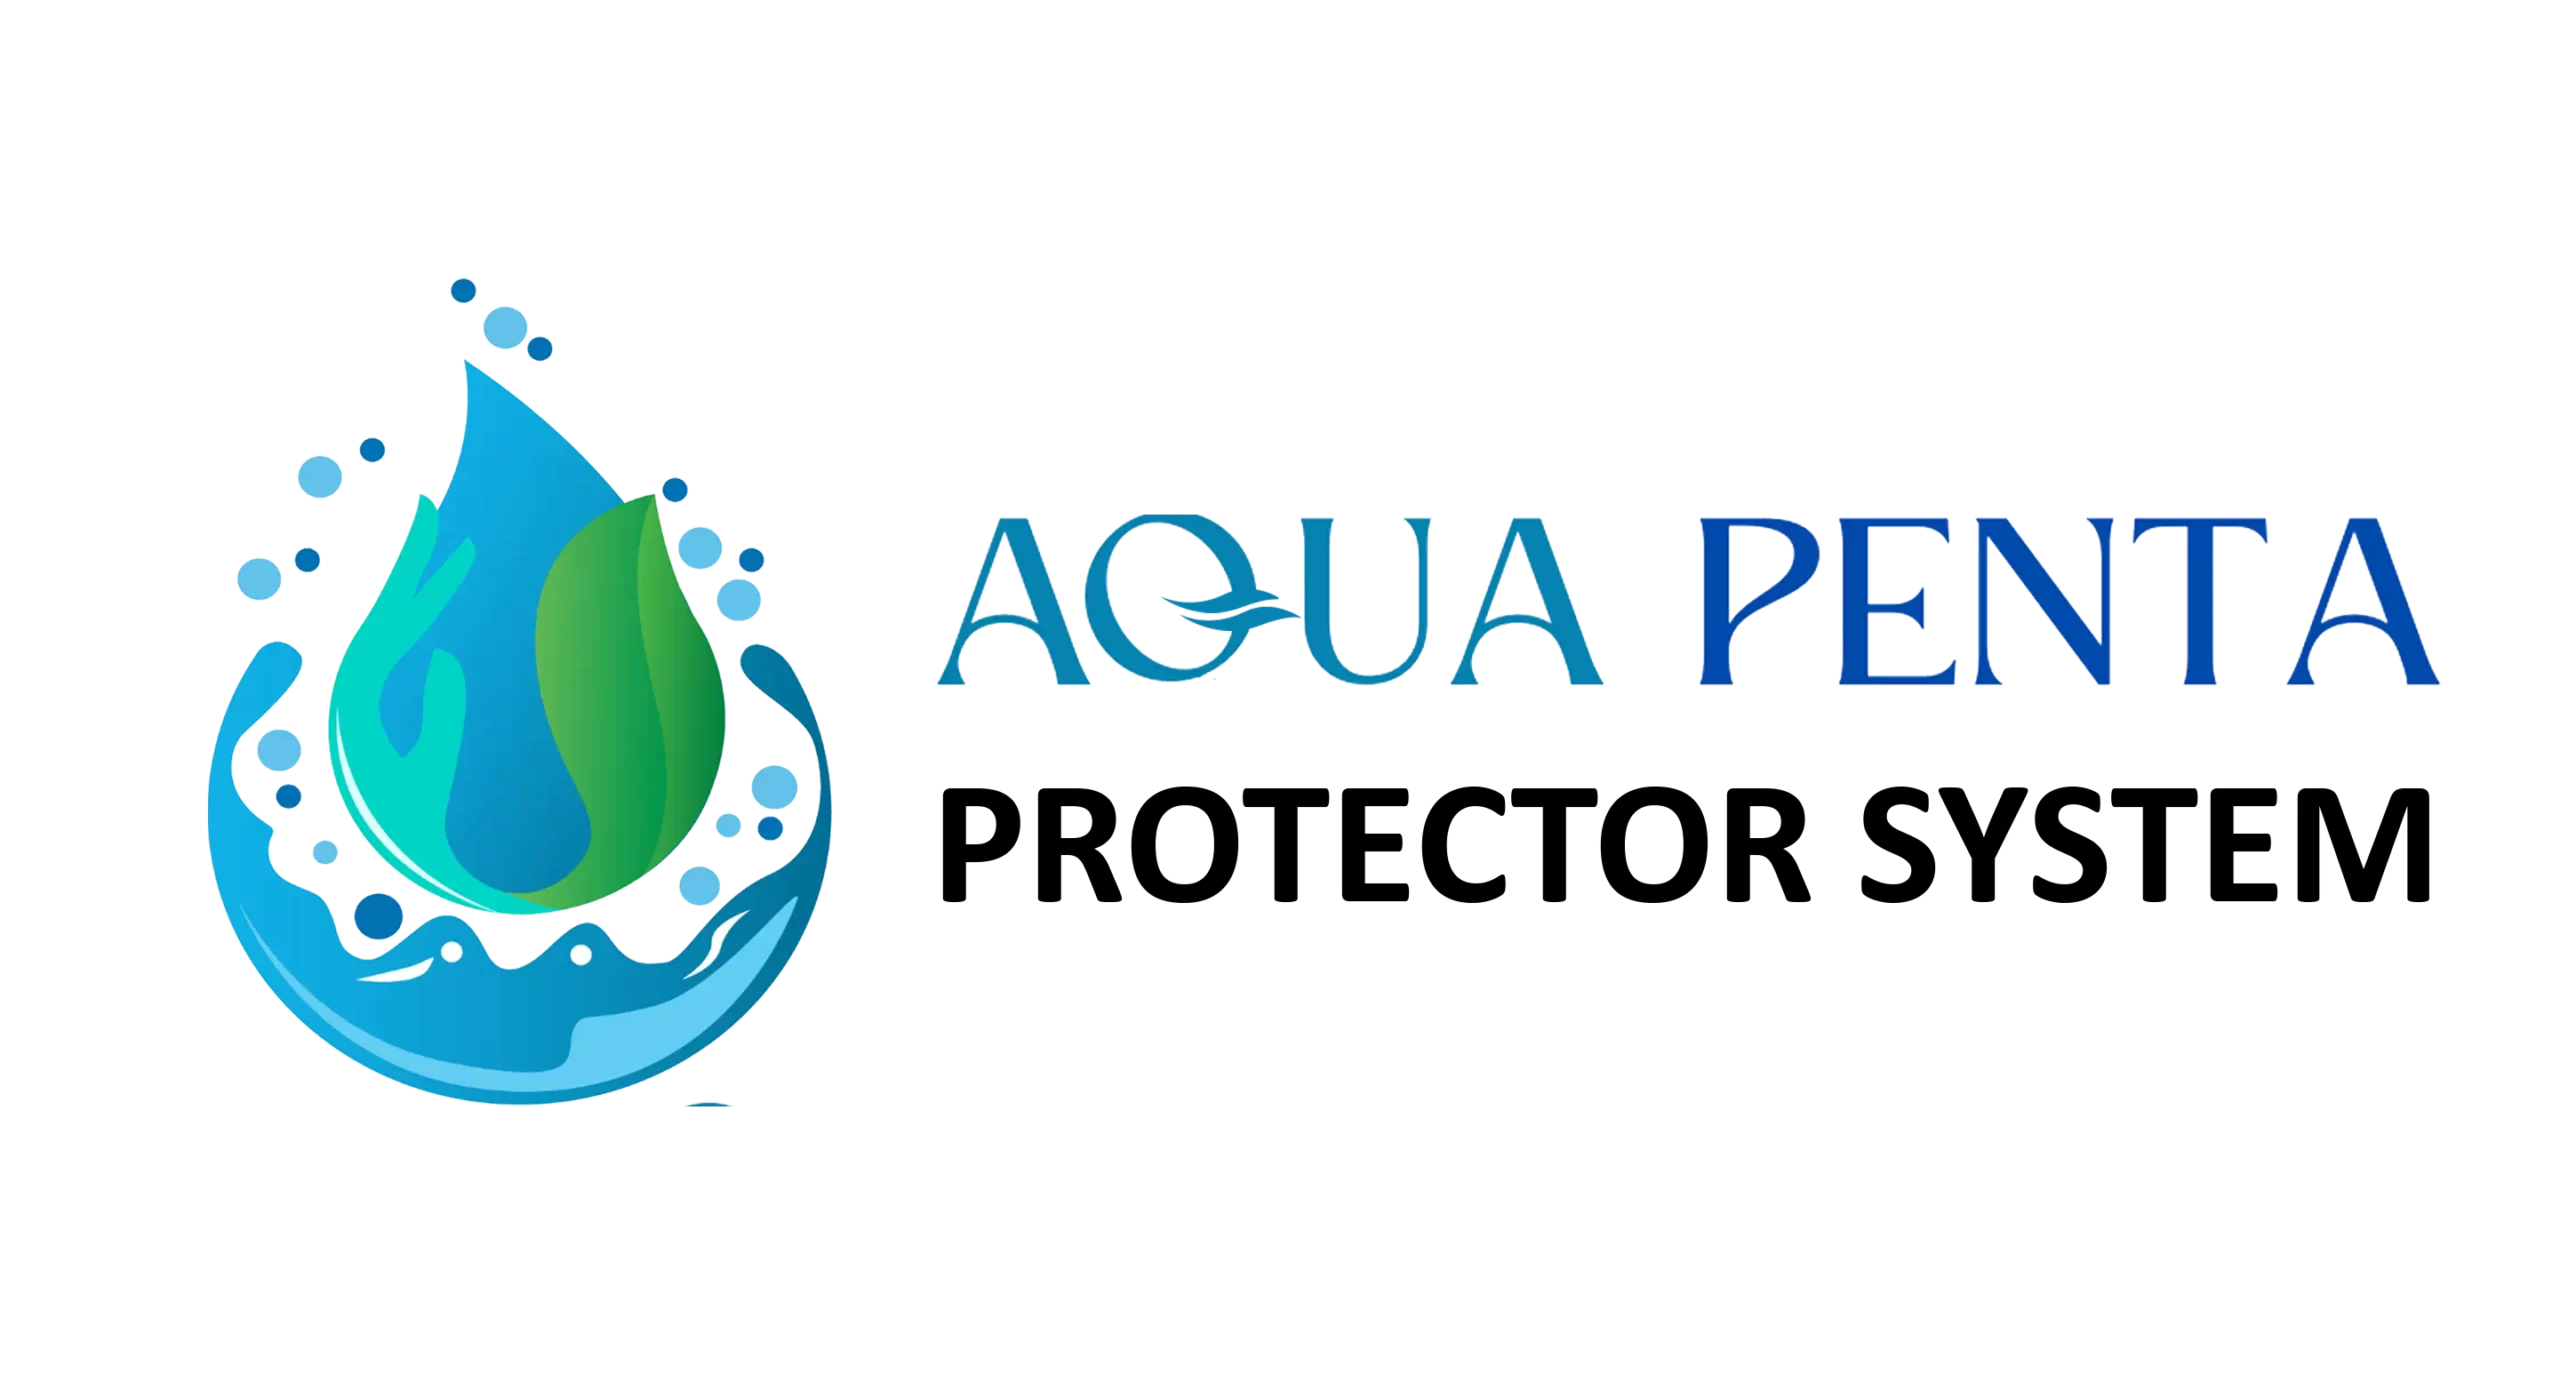 PENTA-AQUA-protector System LOGO